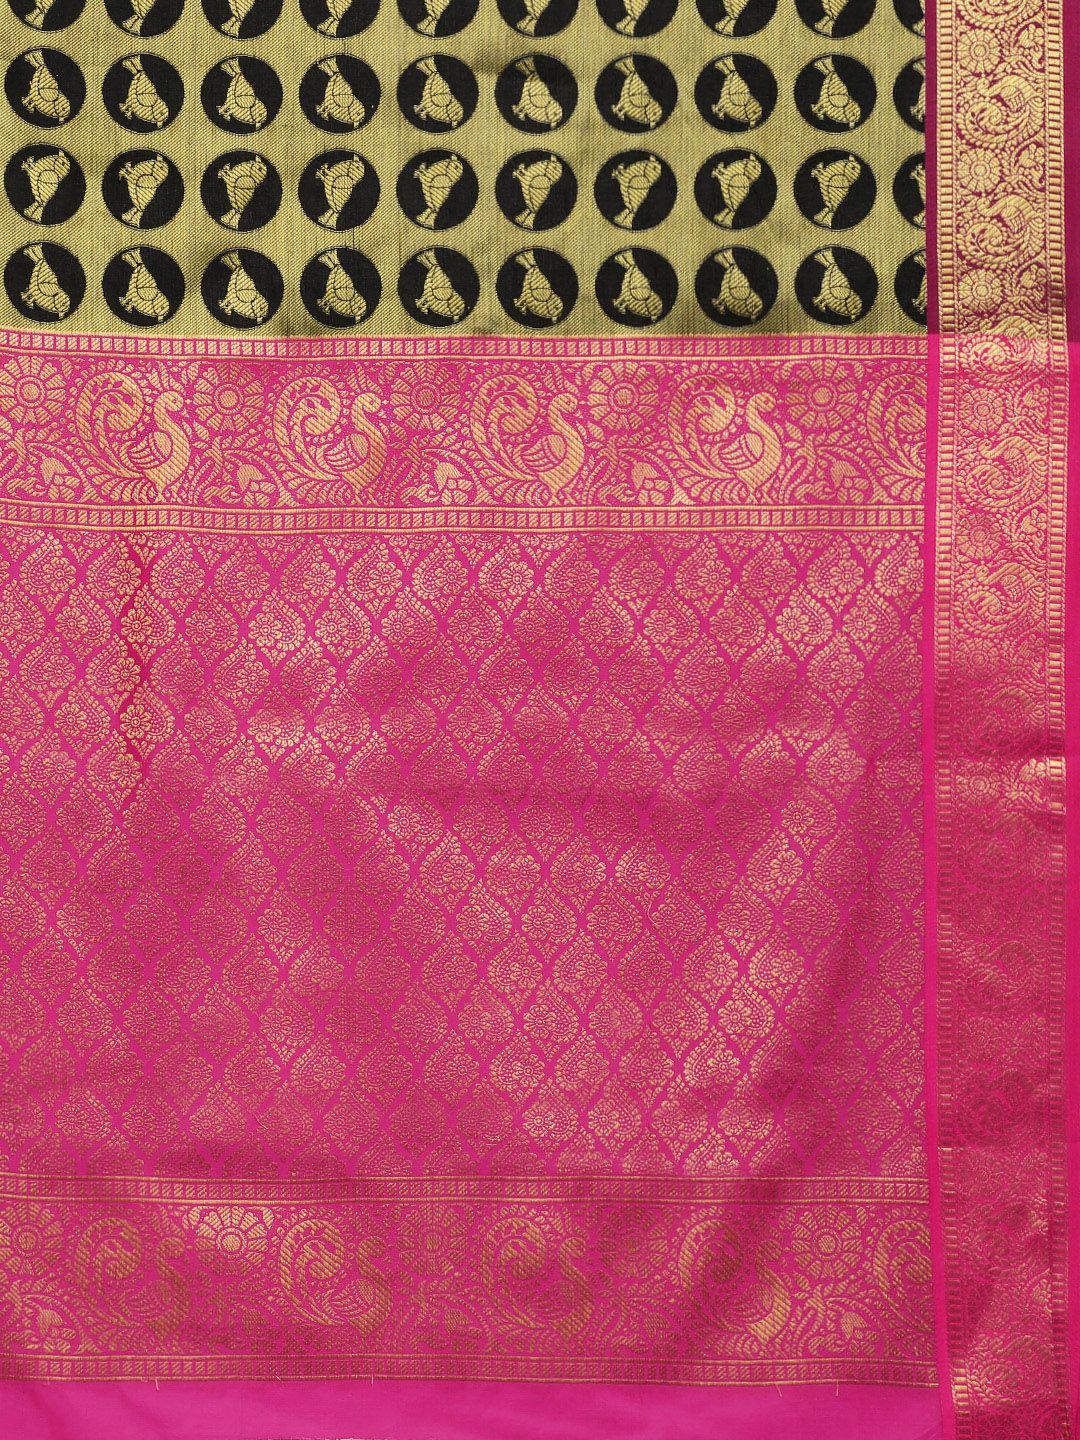 black best kanchipuram pattu south indian saree for woman